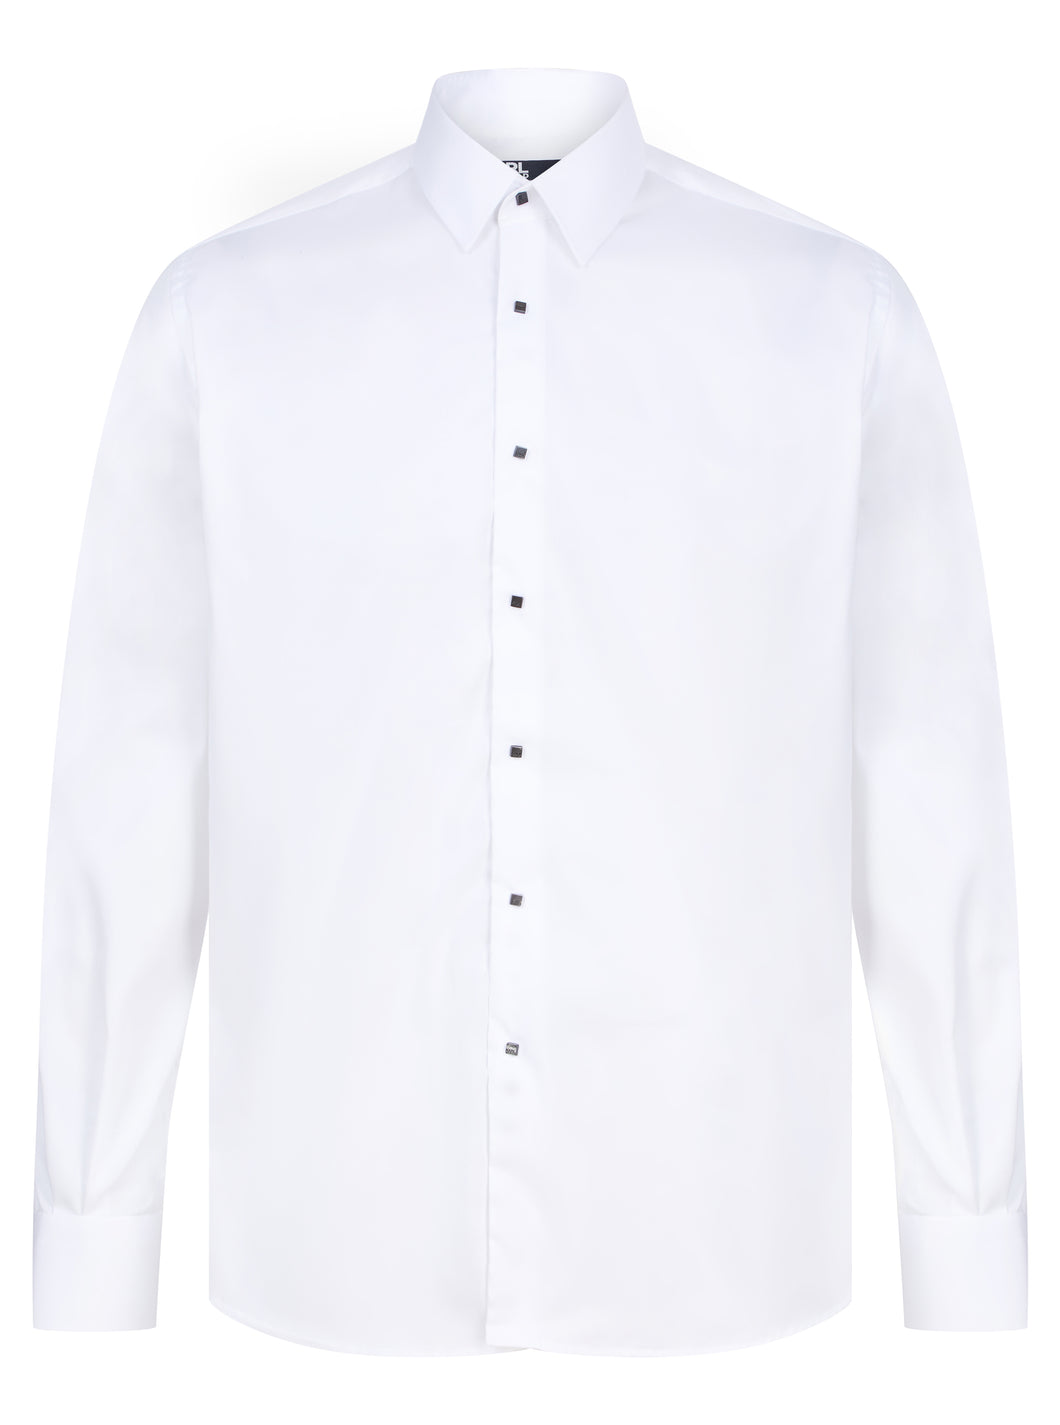 Lagerfeld L/S Press Stud Shirt White